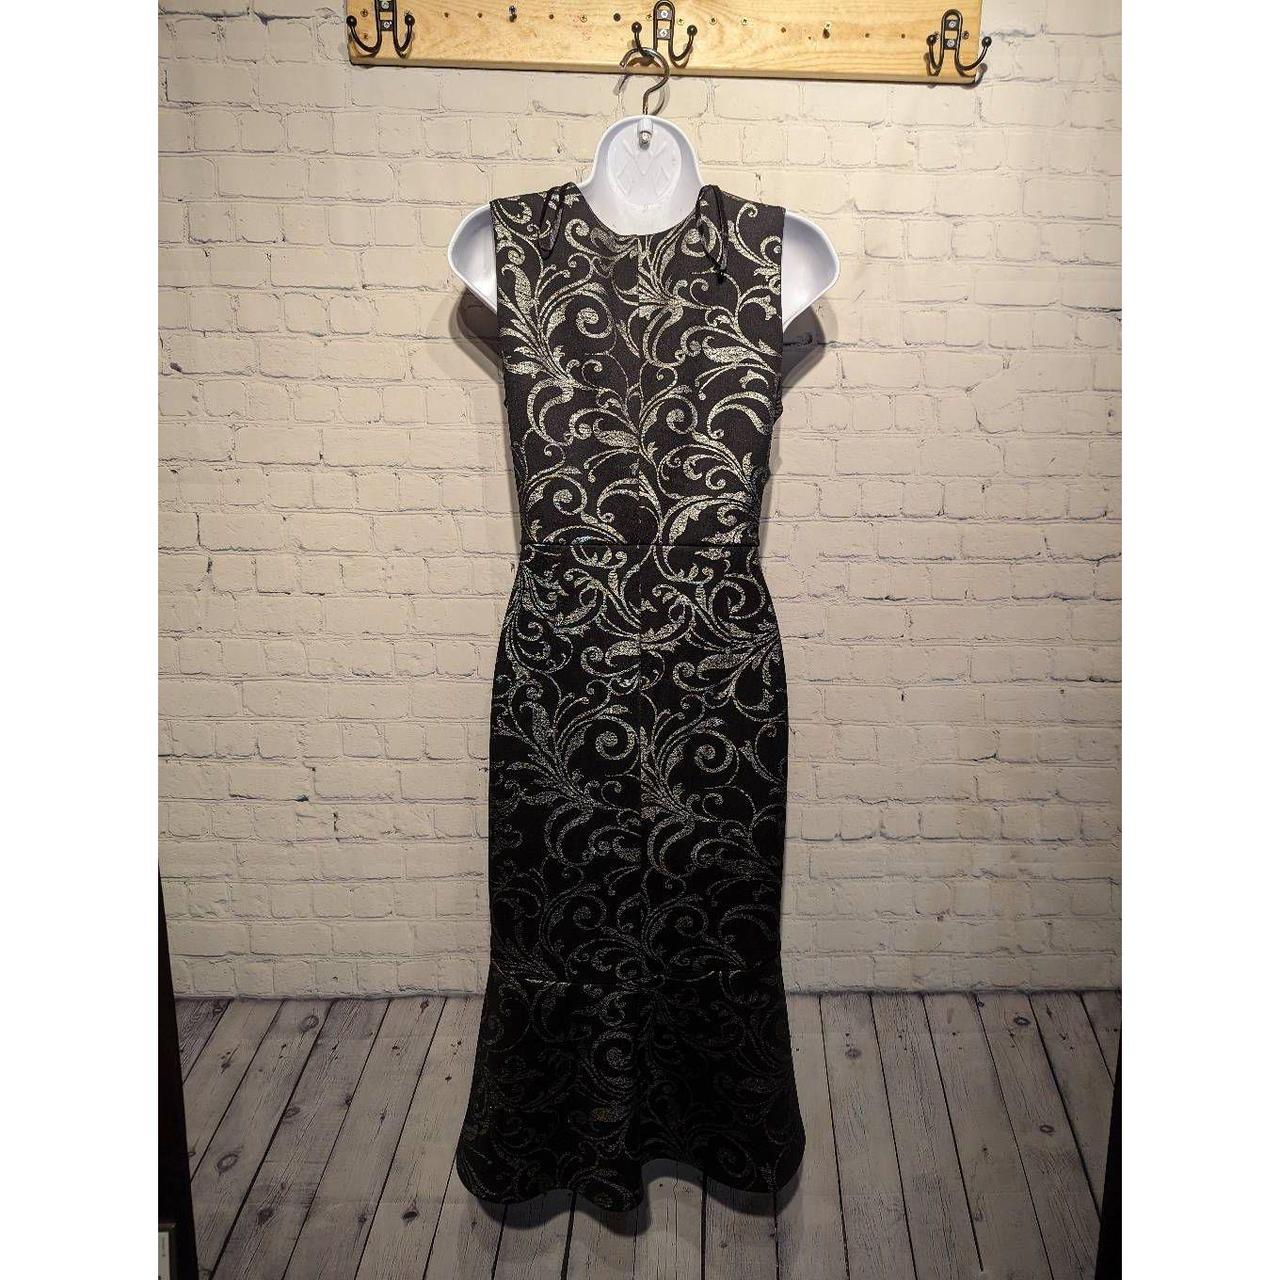 Enfocus Studio Women's Black and Silver Dress (4)